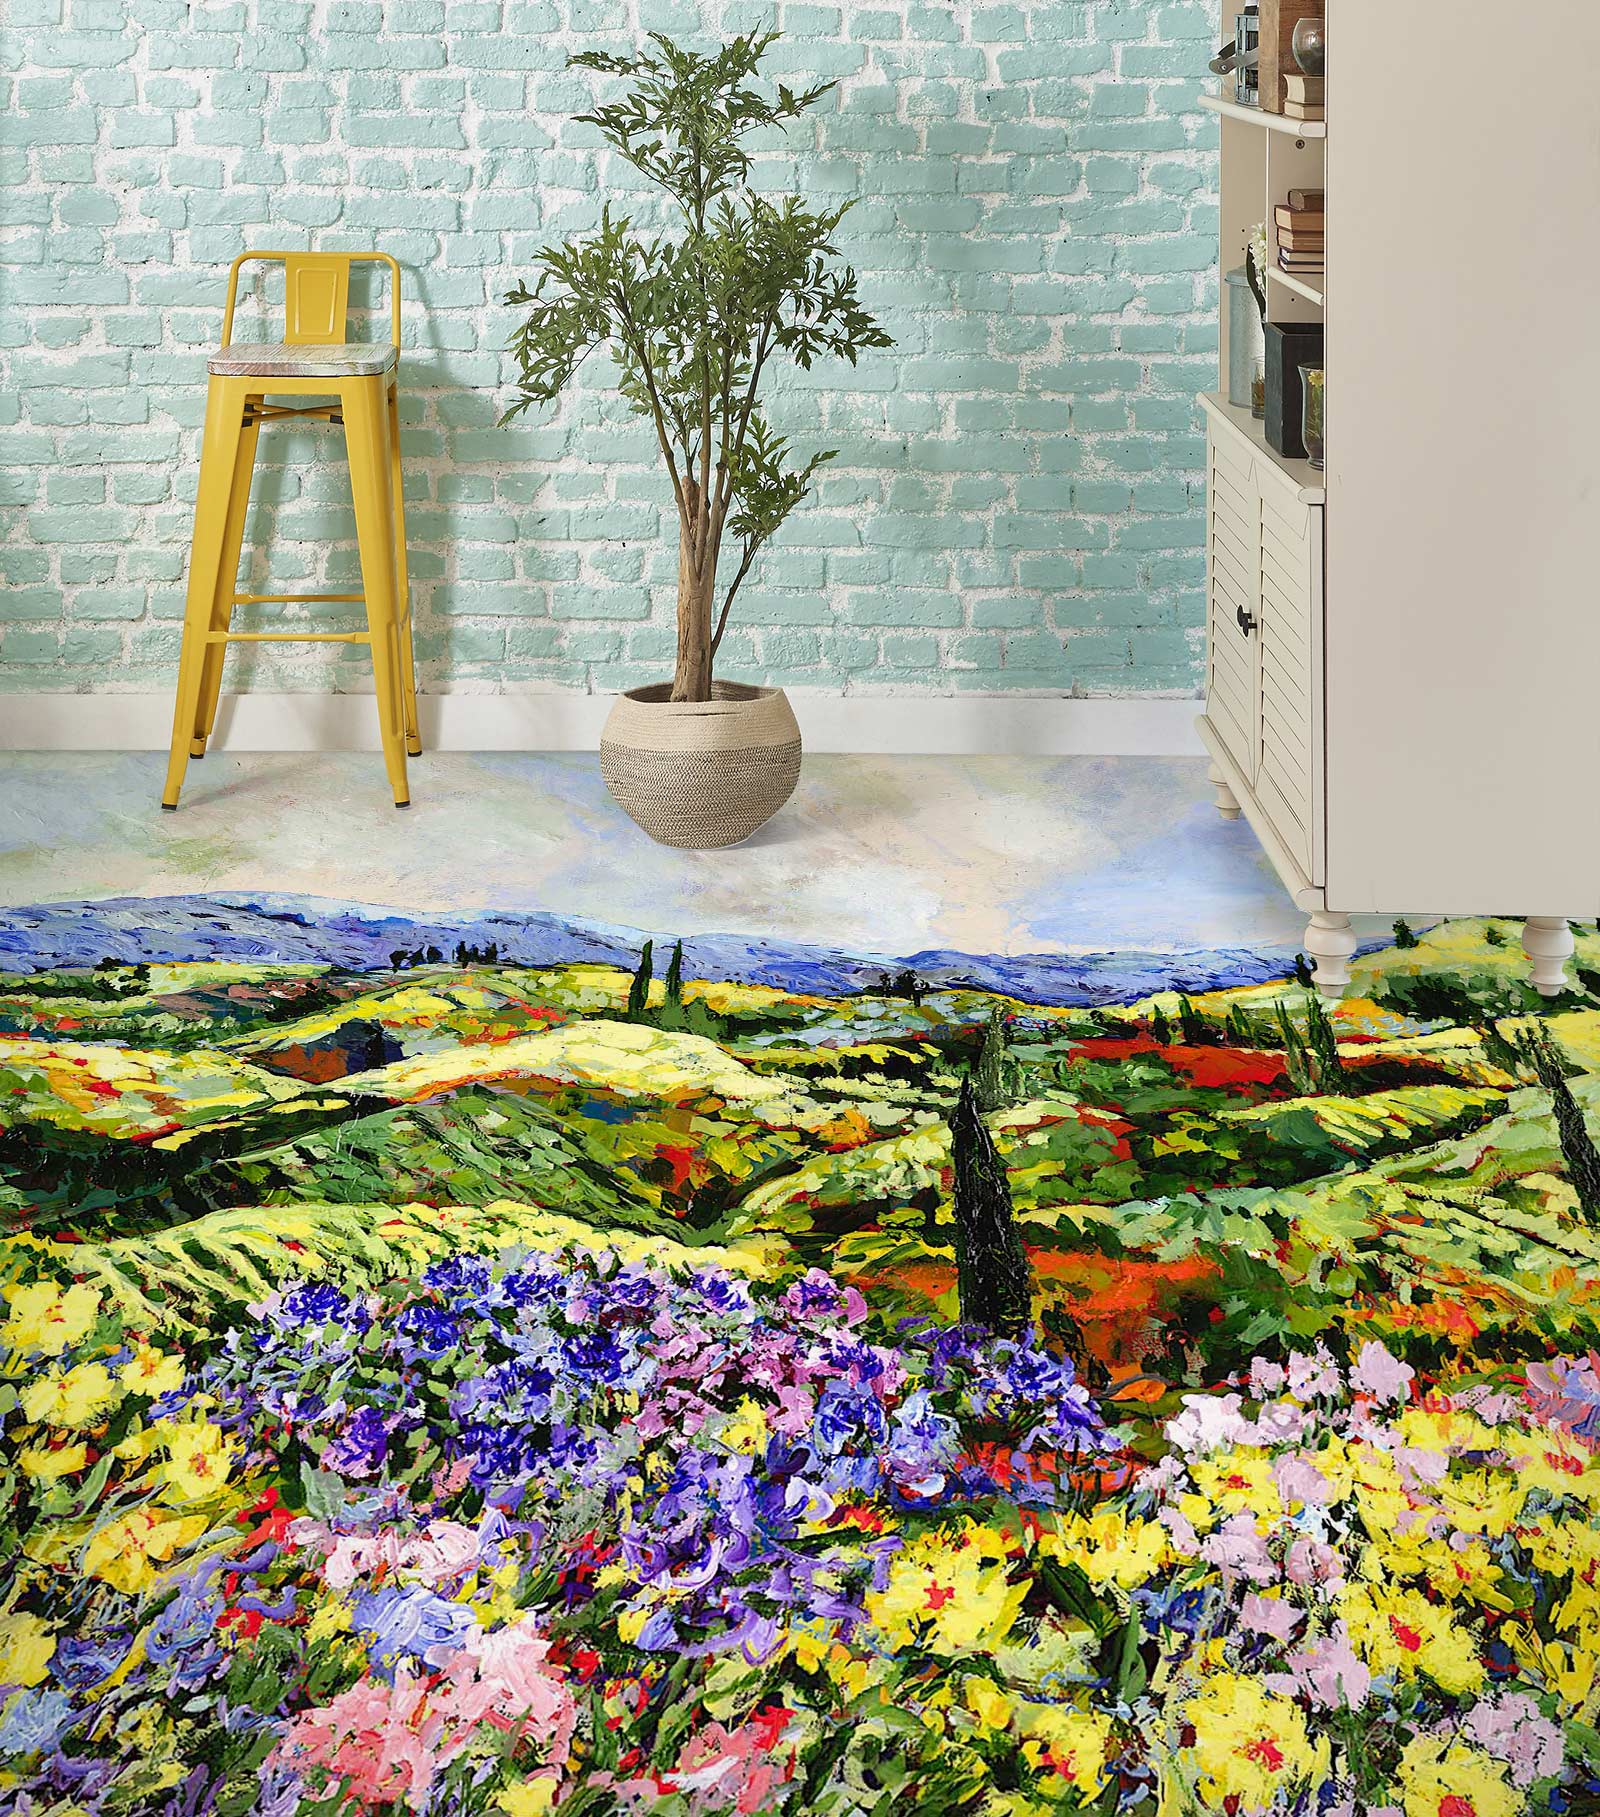 3D Field Colorful Flowers 9537 Allan P. Friedlander Floor Mural  Wallpaper Murals Self-Adhesive Removable Print Epoxy